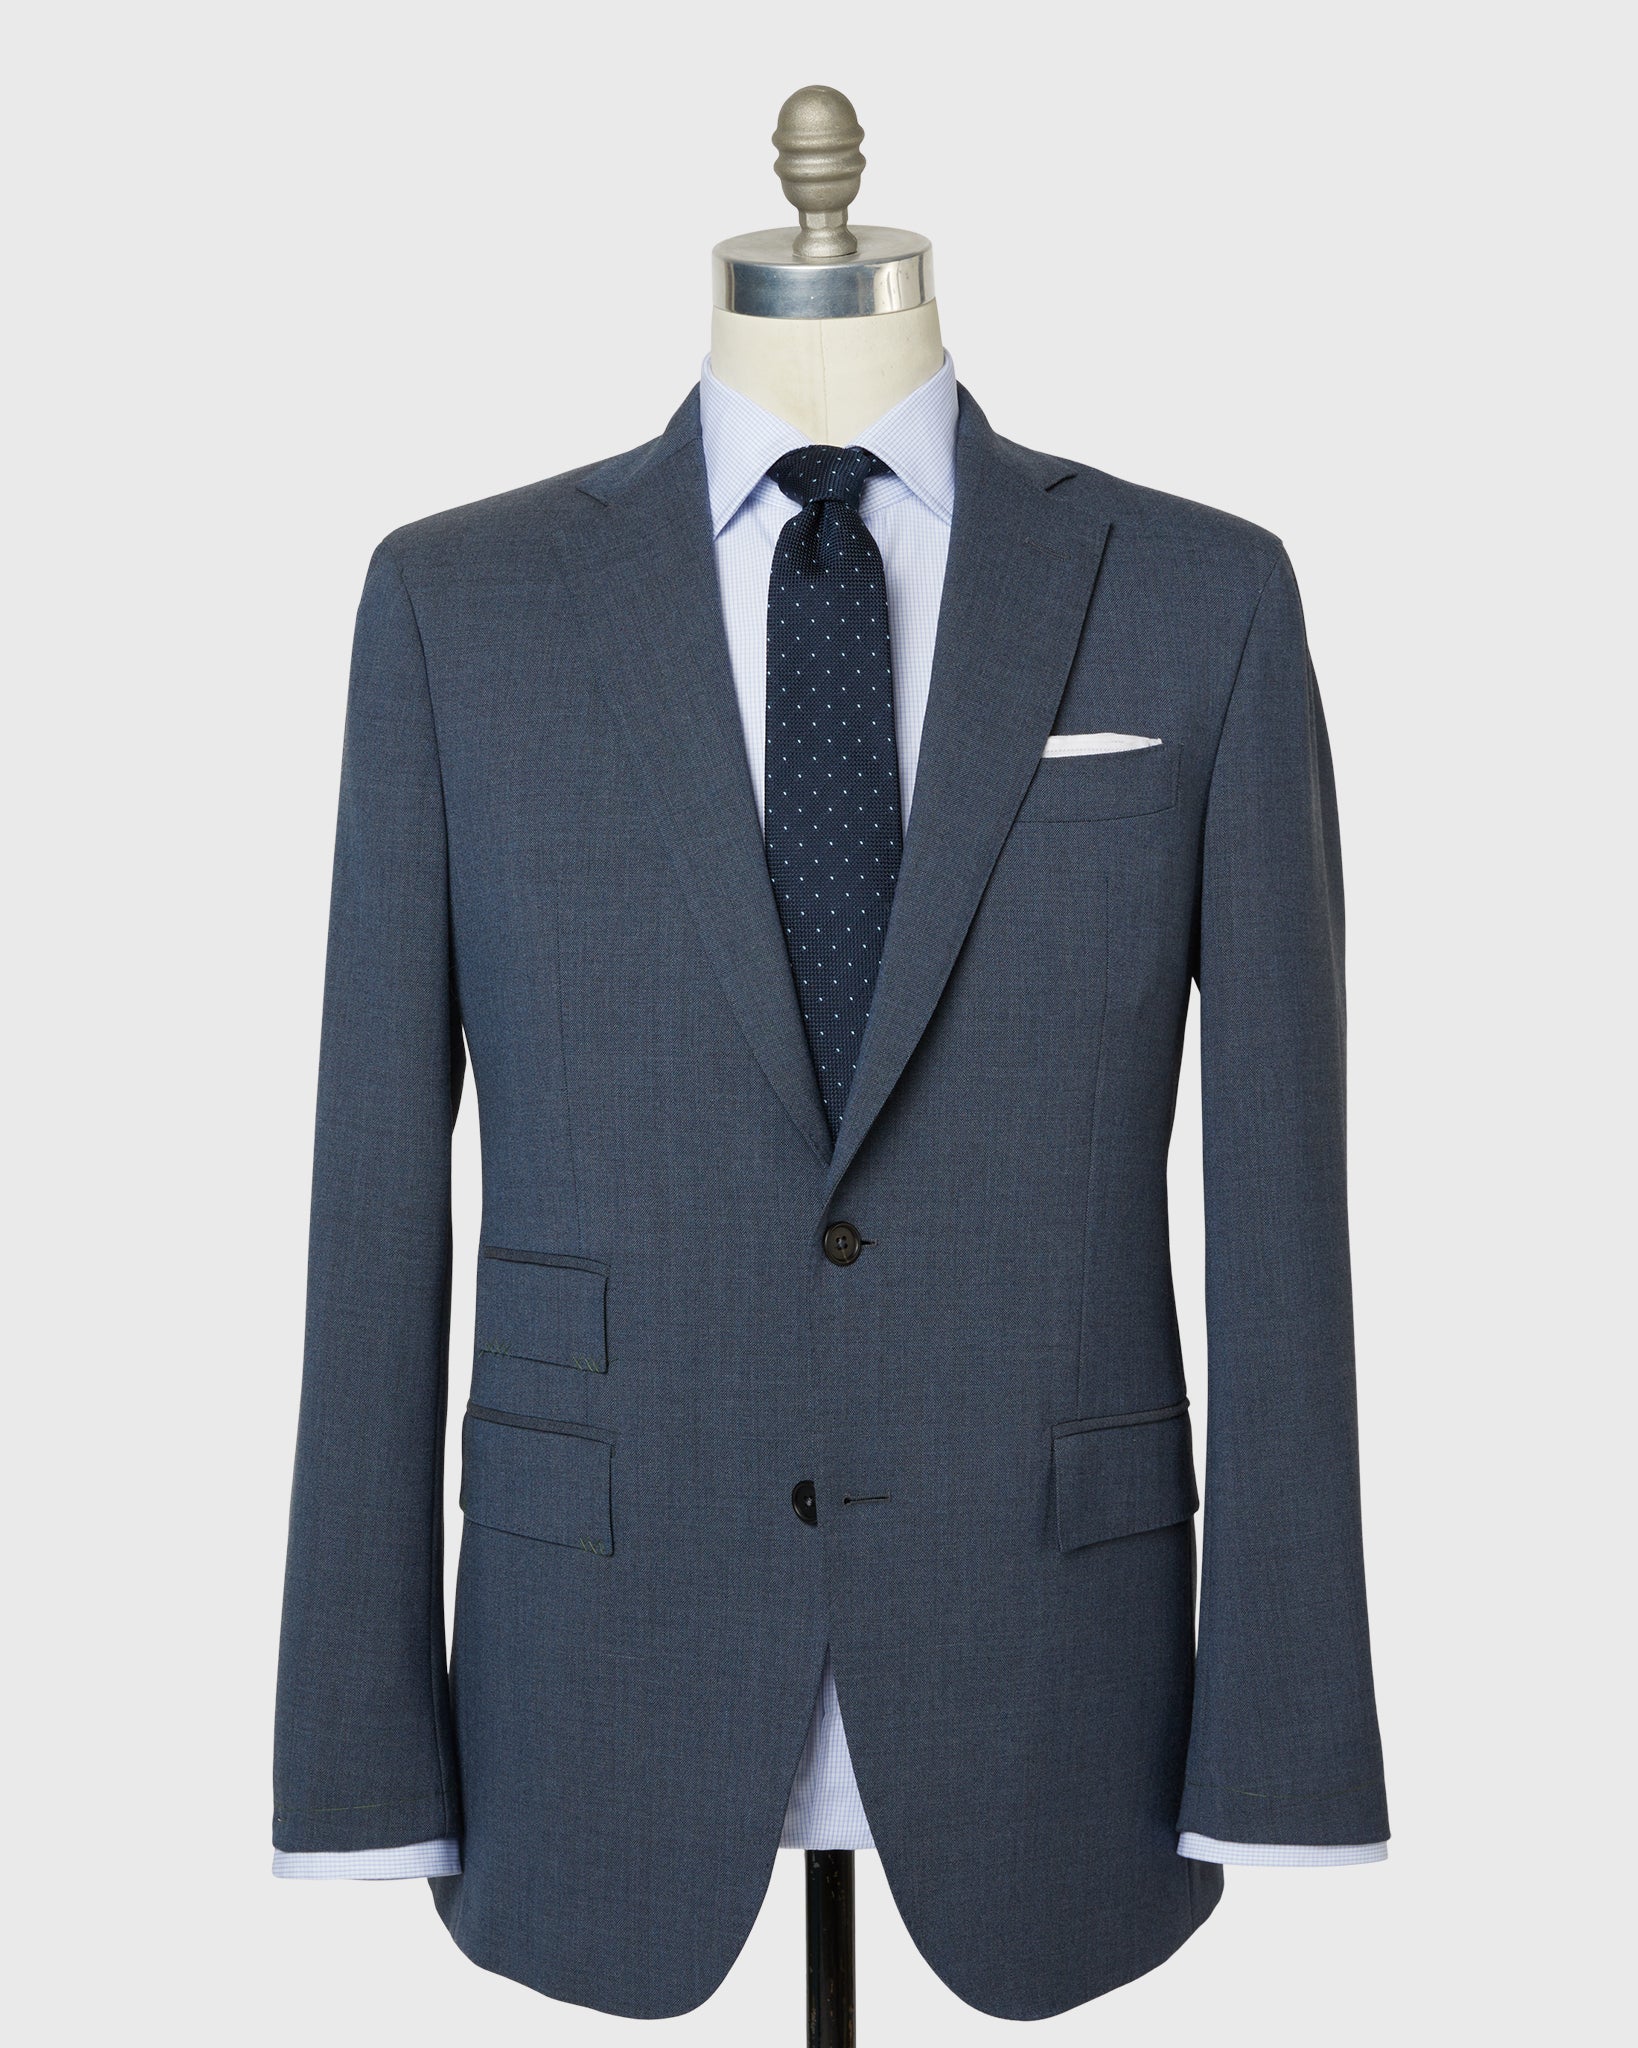 Kincaid No. 2 Suit in Postal Plainweave